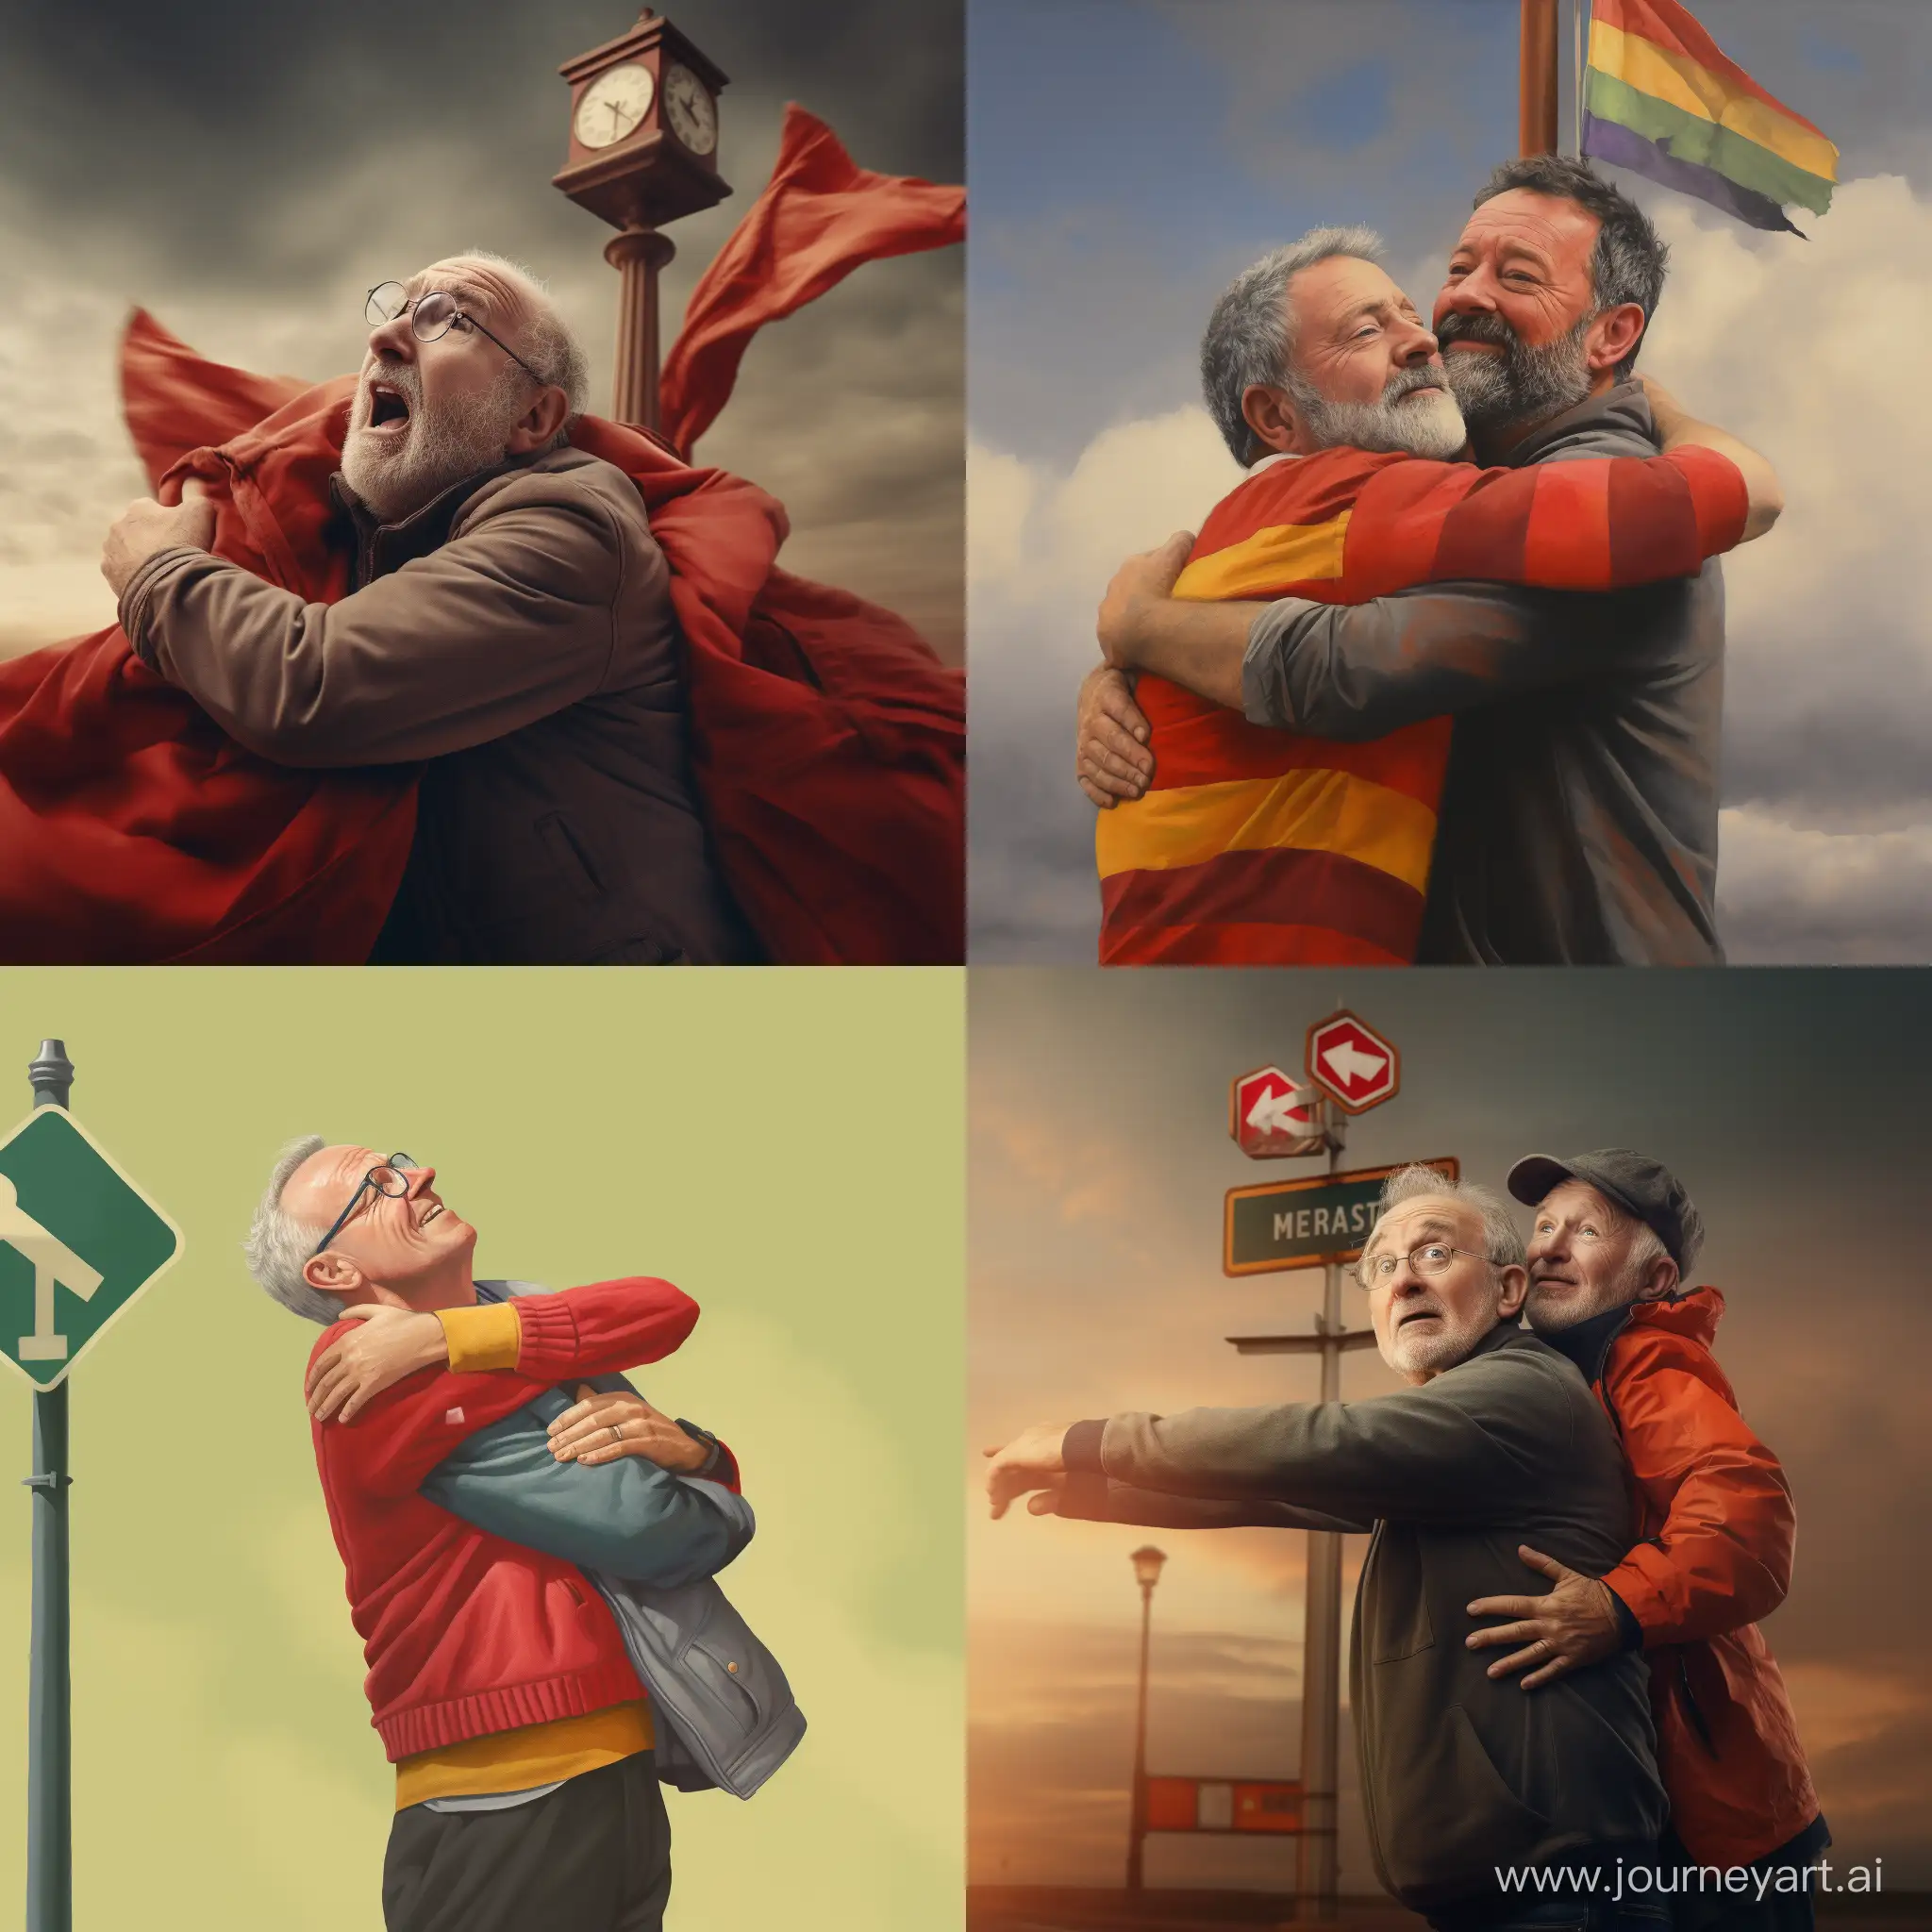 Man in his 50s hugging semaphore passionately. 